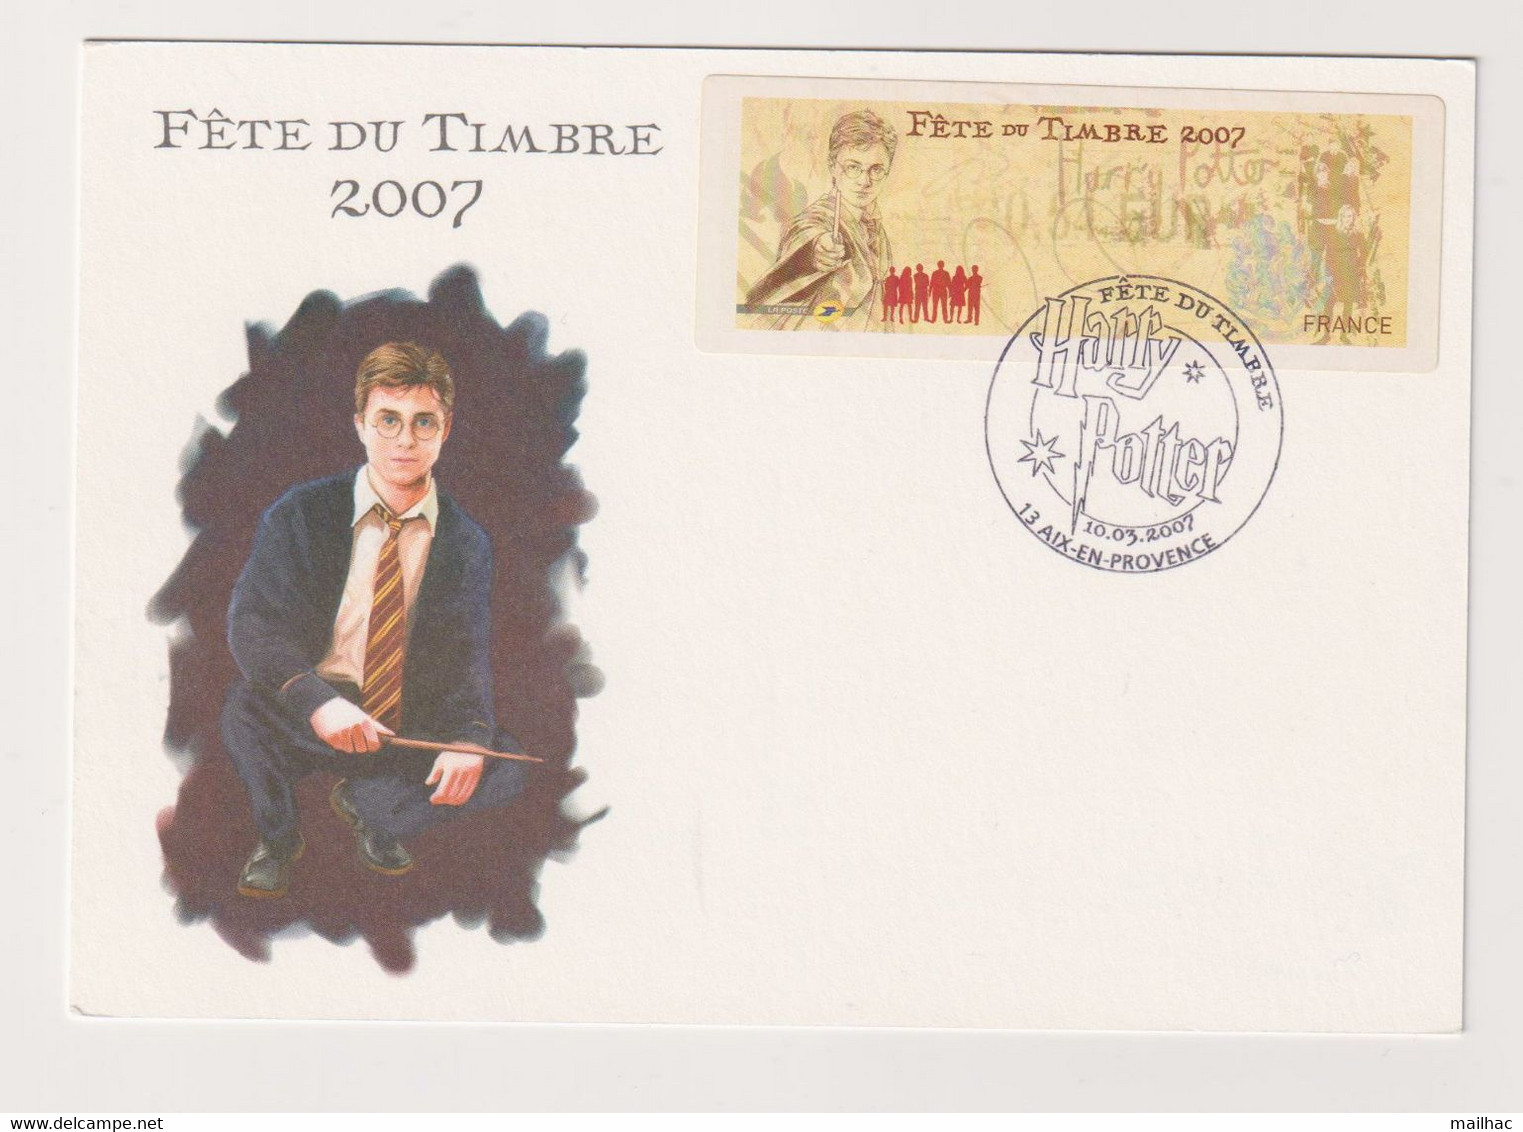 Fête Du Timbre 2007 - Harry Potter - Non Voyagée - 1999-2009 Illustrated Franking Labels